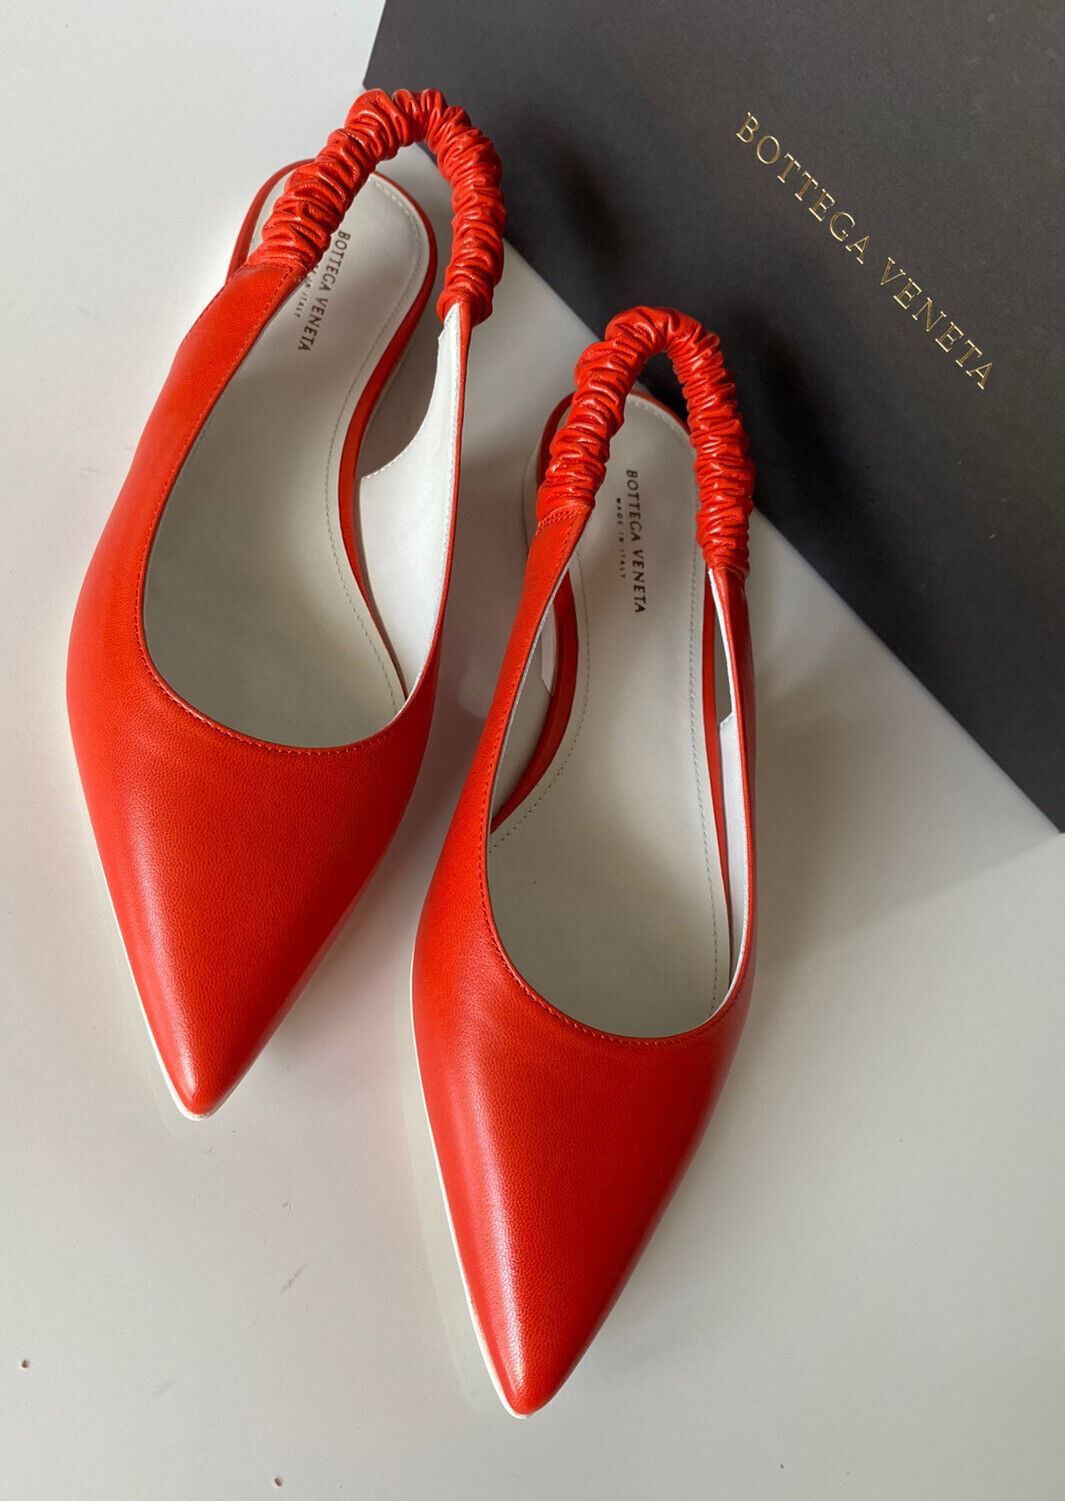 NIB $620 Bottega Veneta Women's Flat Pump Reddish Orange Shoes 8.5 US 565640 IT